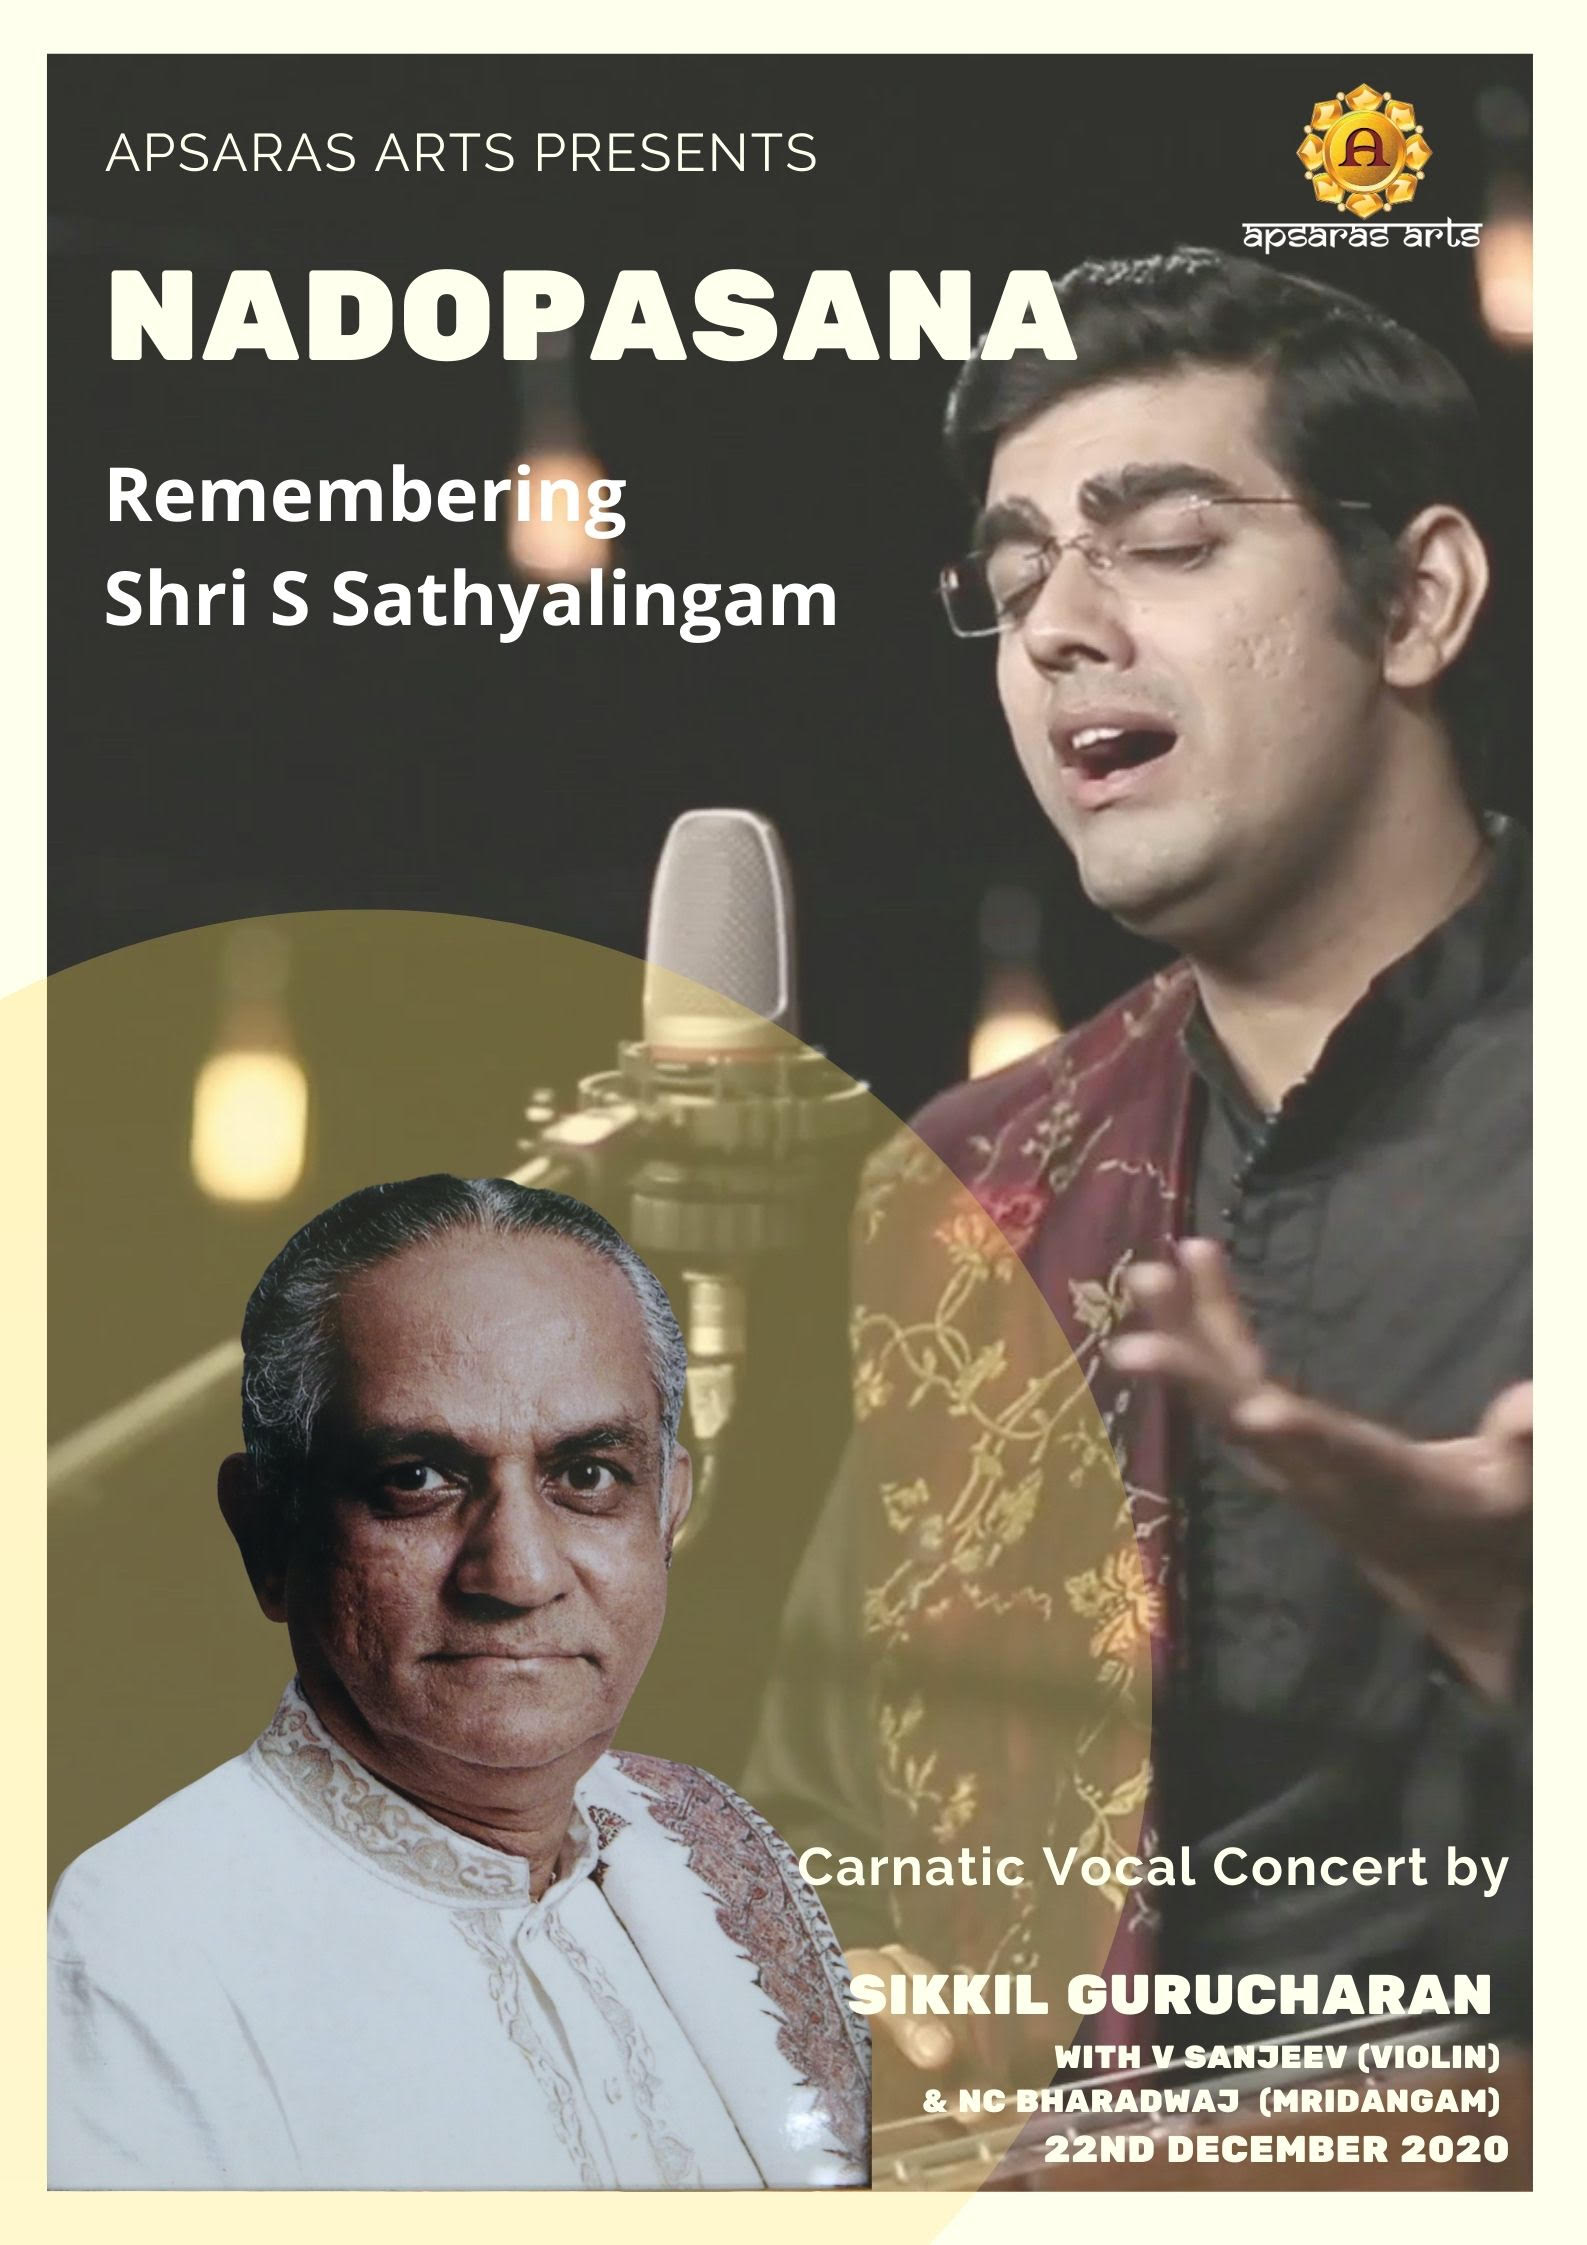 NADOPASANA - Remembering Shri S Sathyalingam 
Carnatic Music Concert by Sikkil Gurucharan